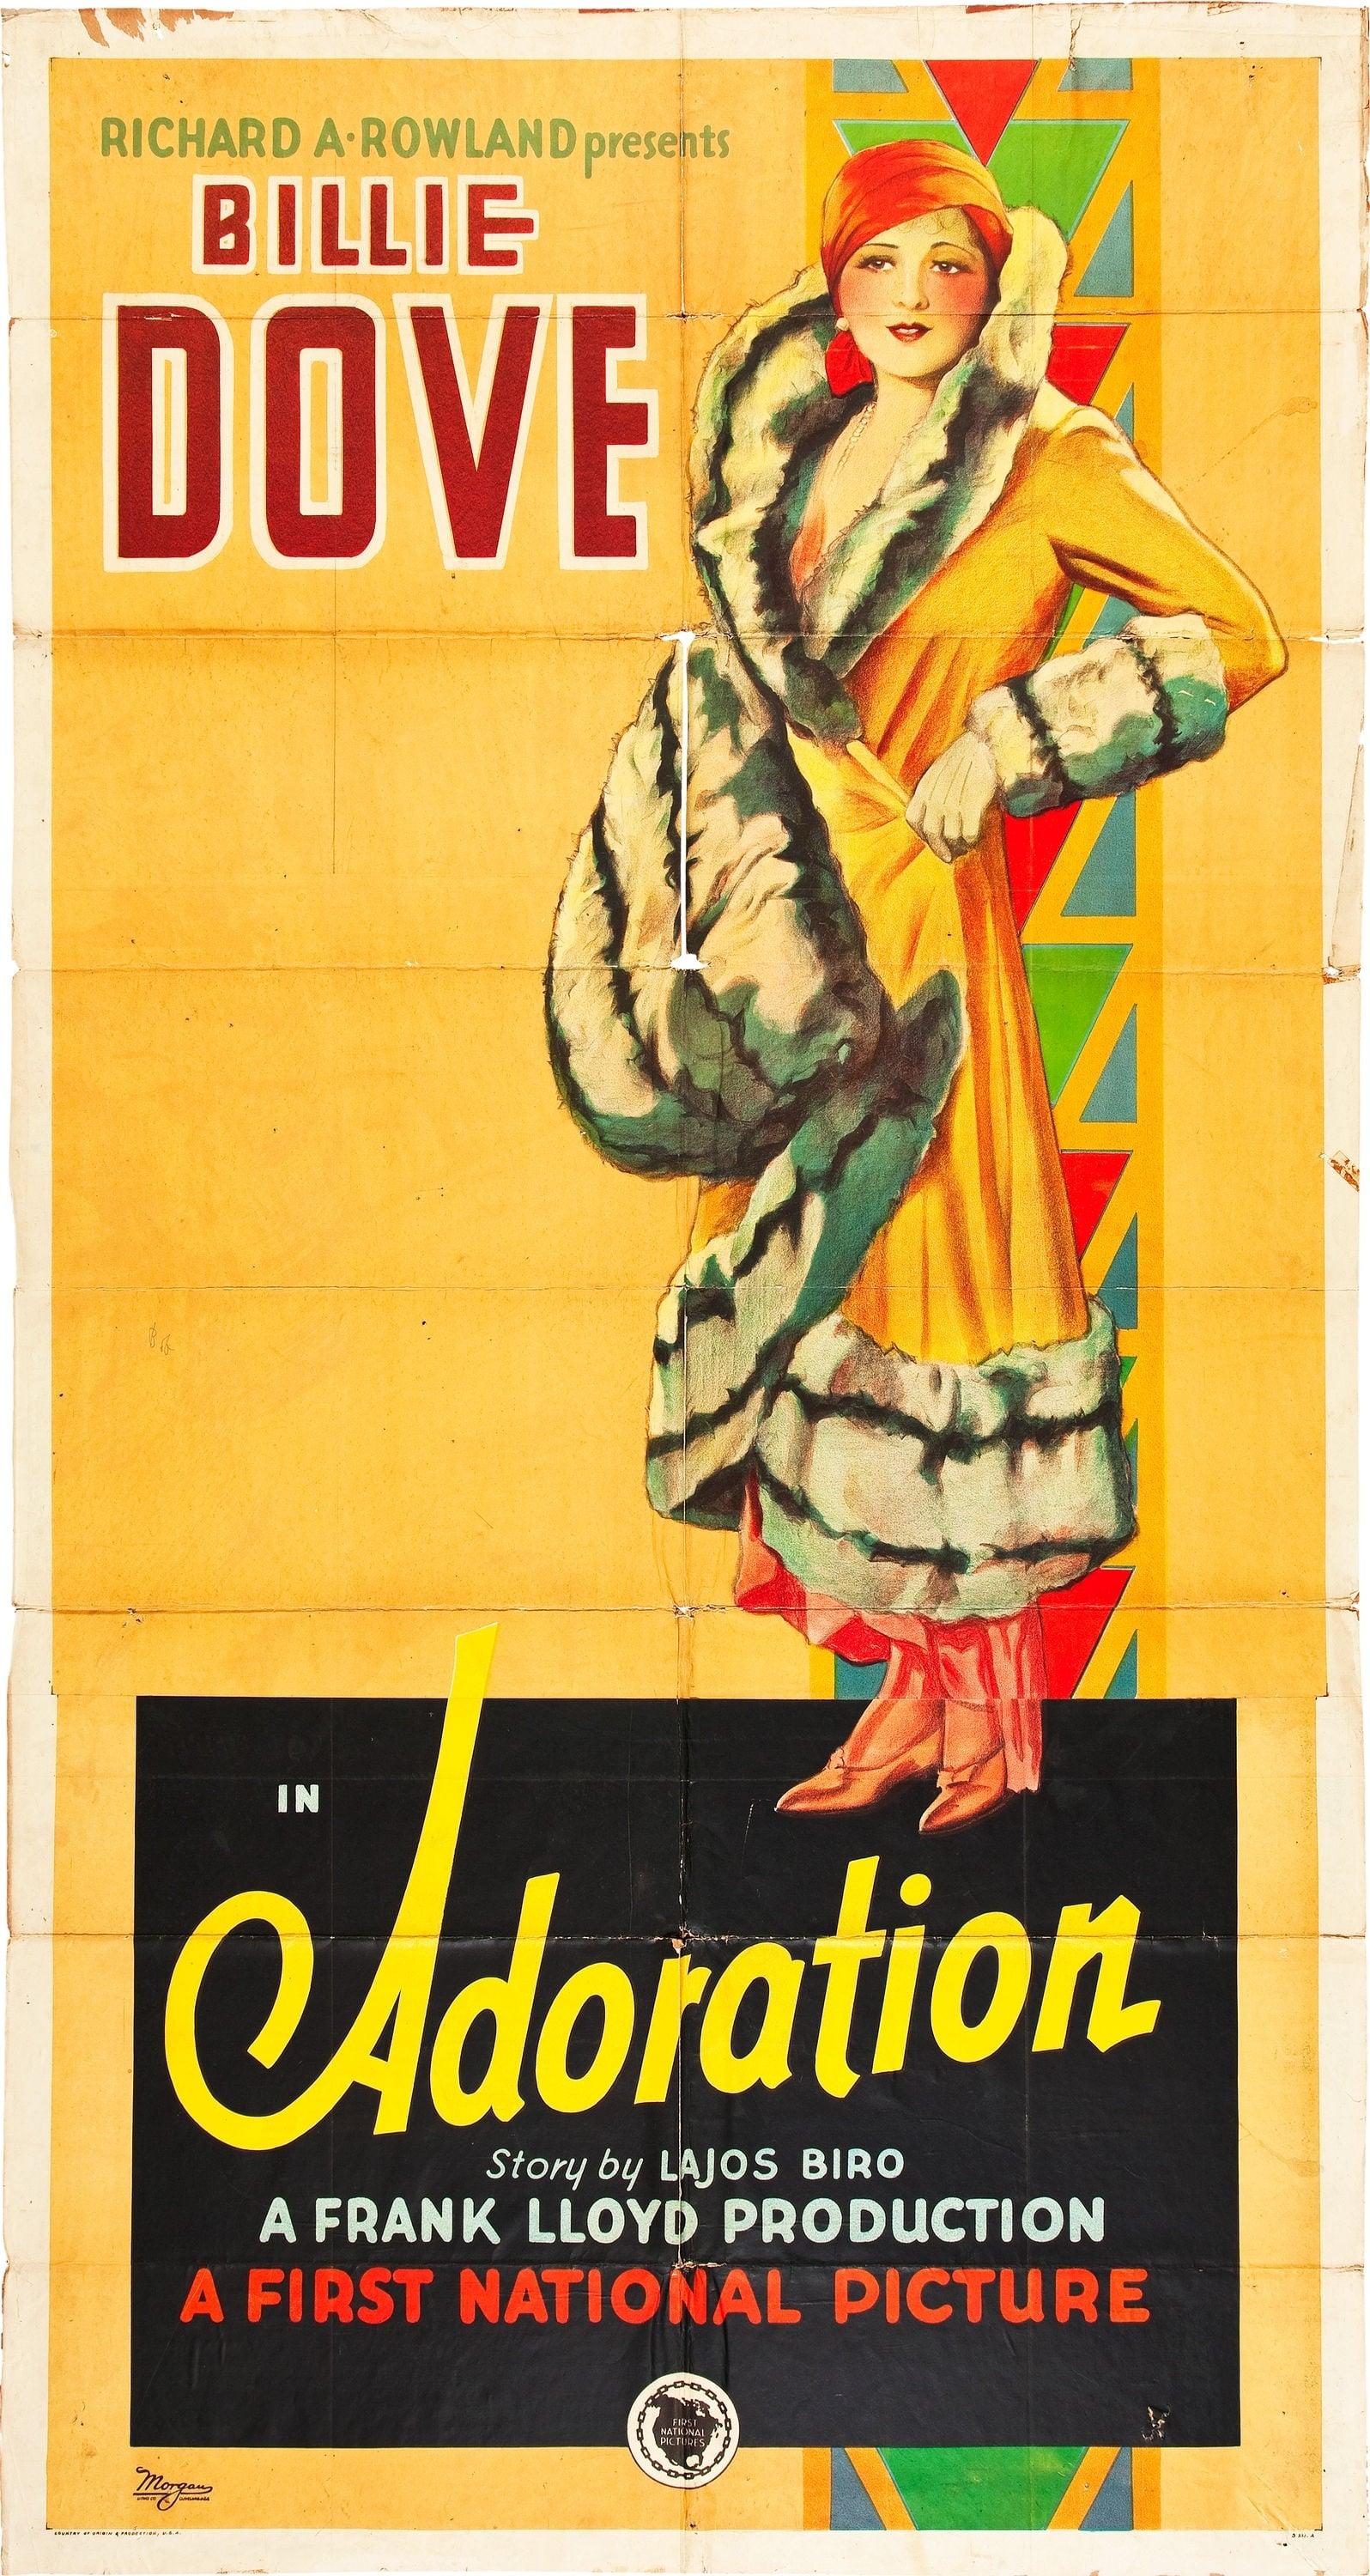 Adoration poster